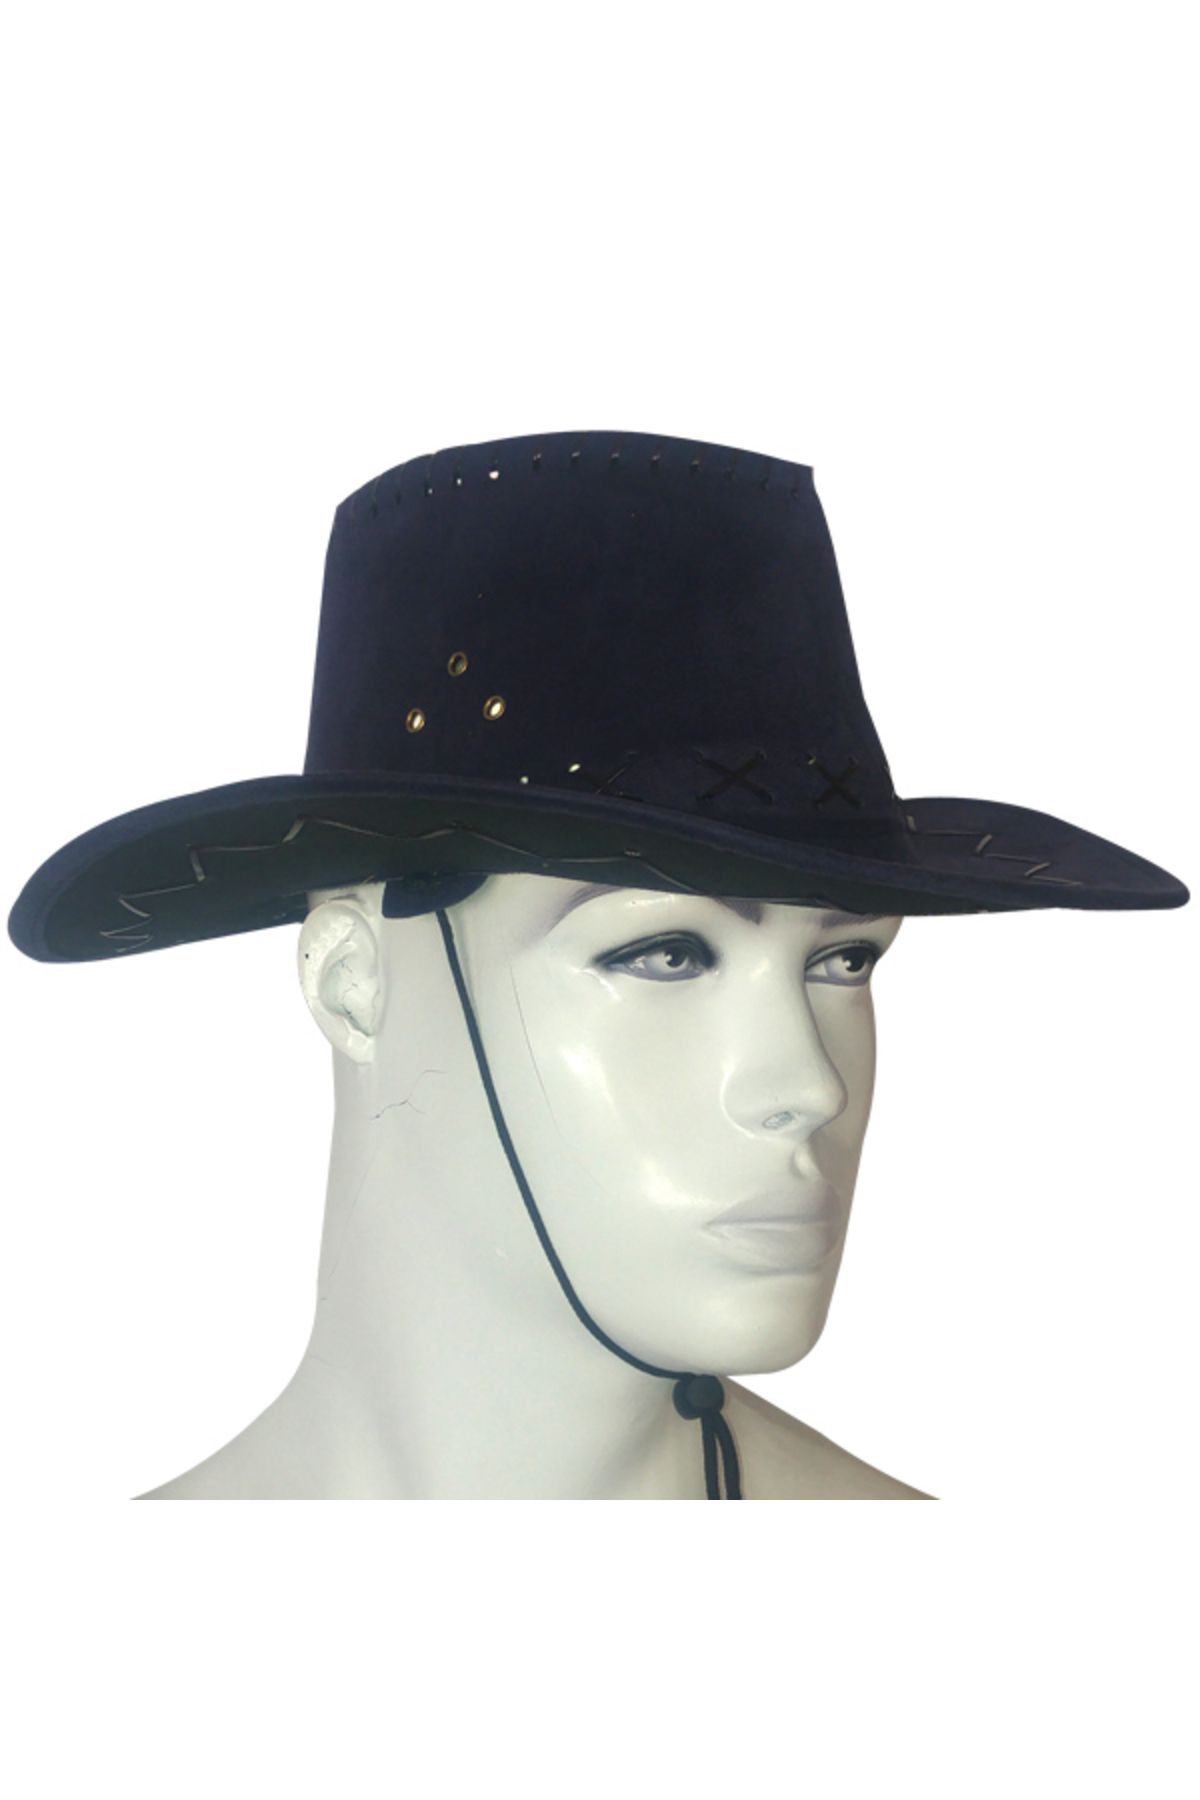 Genel Markalar Hg 200 Kovboy Şapka Lacivert